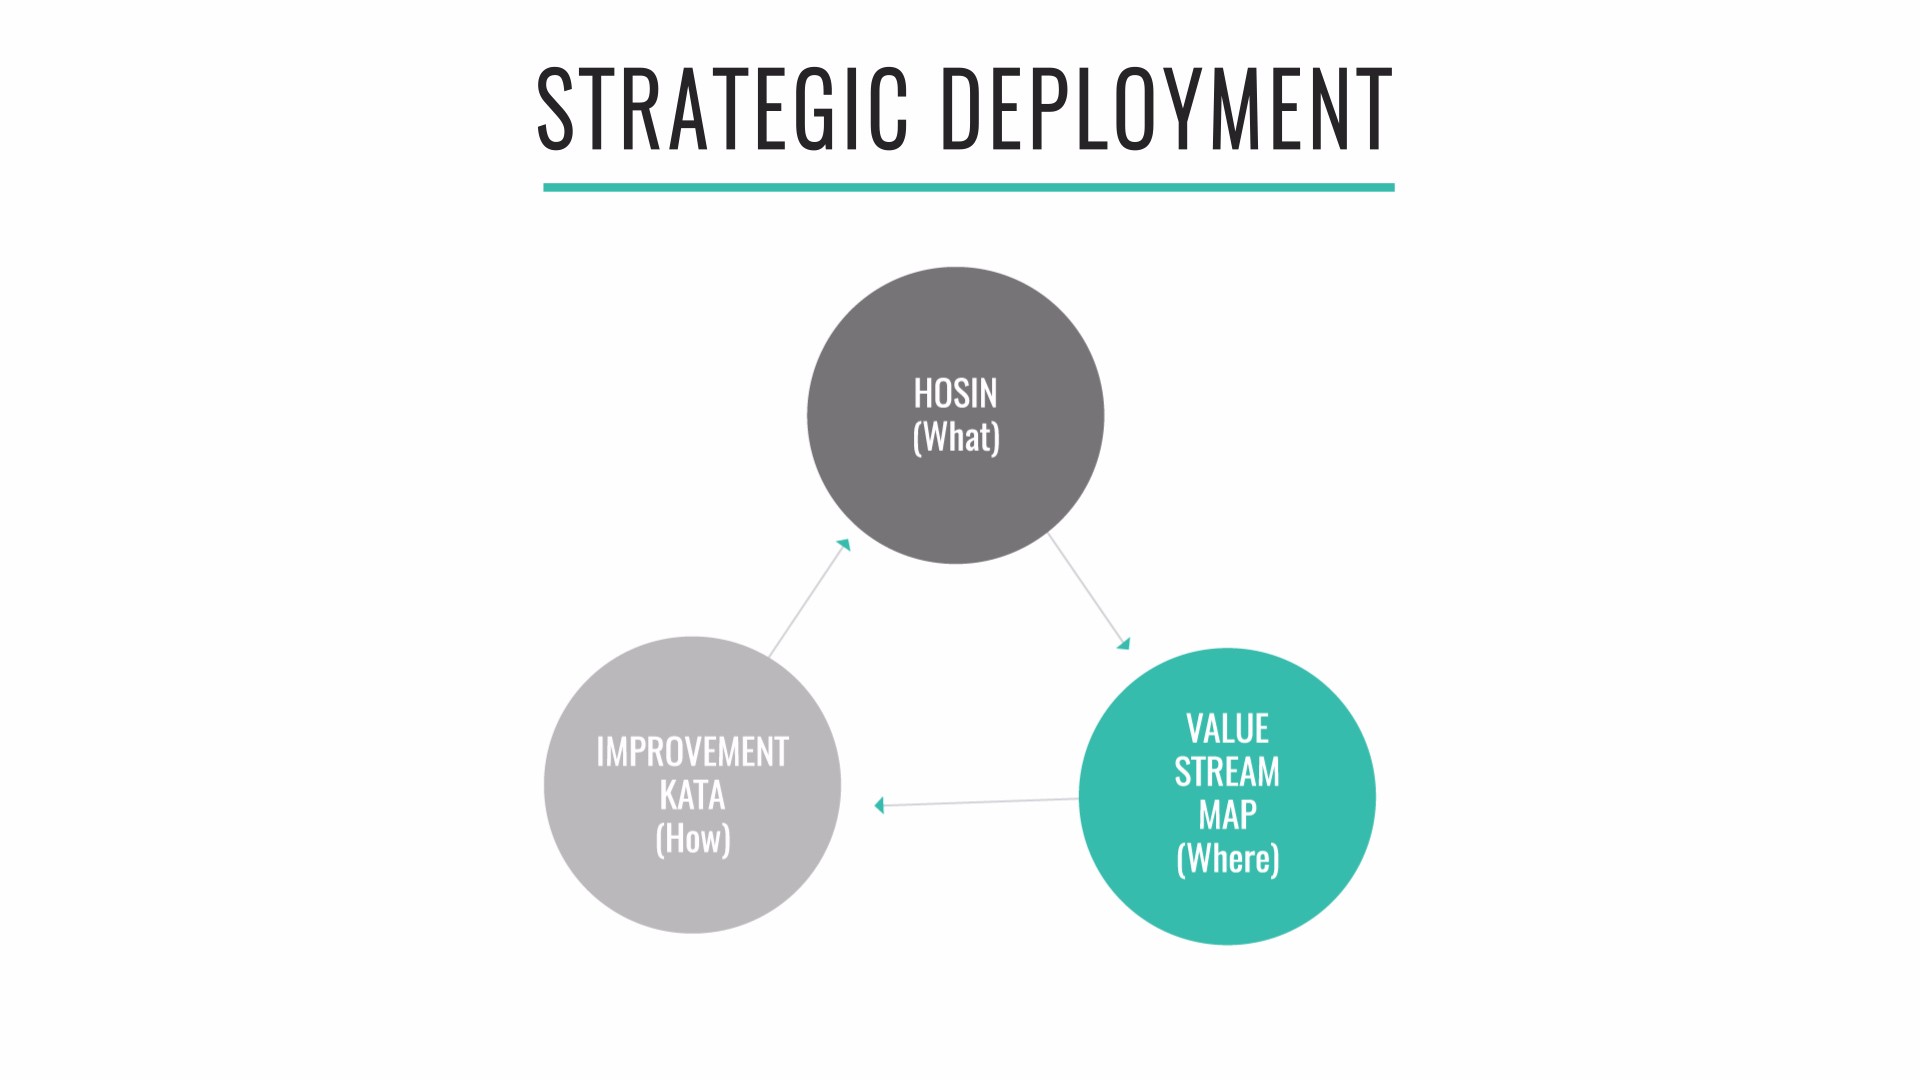 Strategic deployment